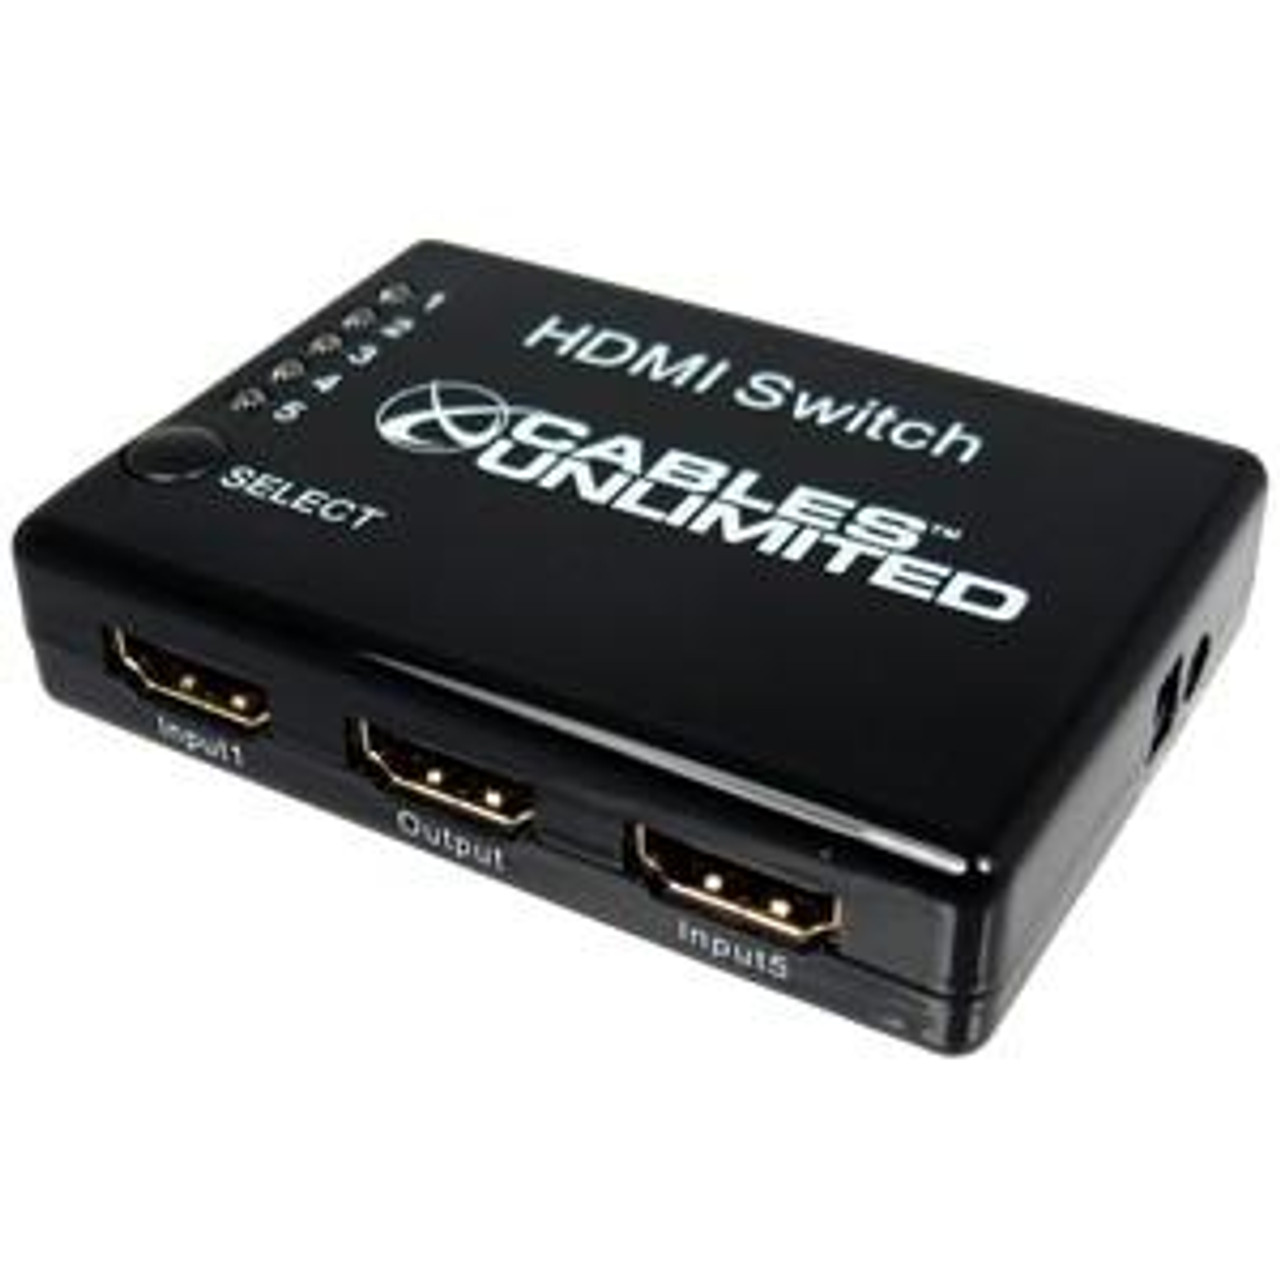 SWB-7865 Cables Unlimited Pro A/V Series Mini HDMI Switch 5 x Mini HDMI Digital Audio/Video In, 1 x Mini HDMI Digital Audio/Video Out (Refurbished)